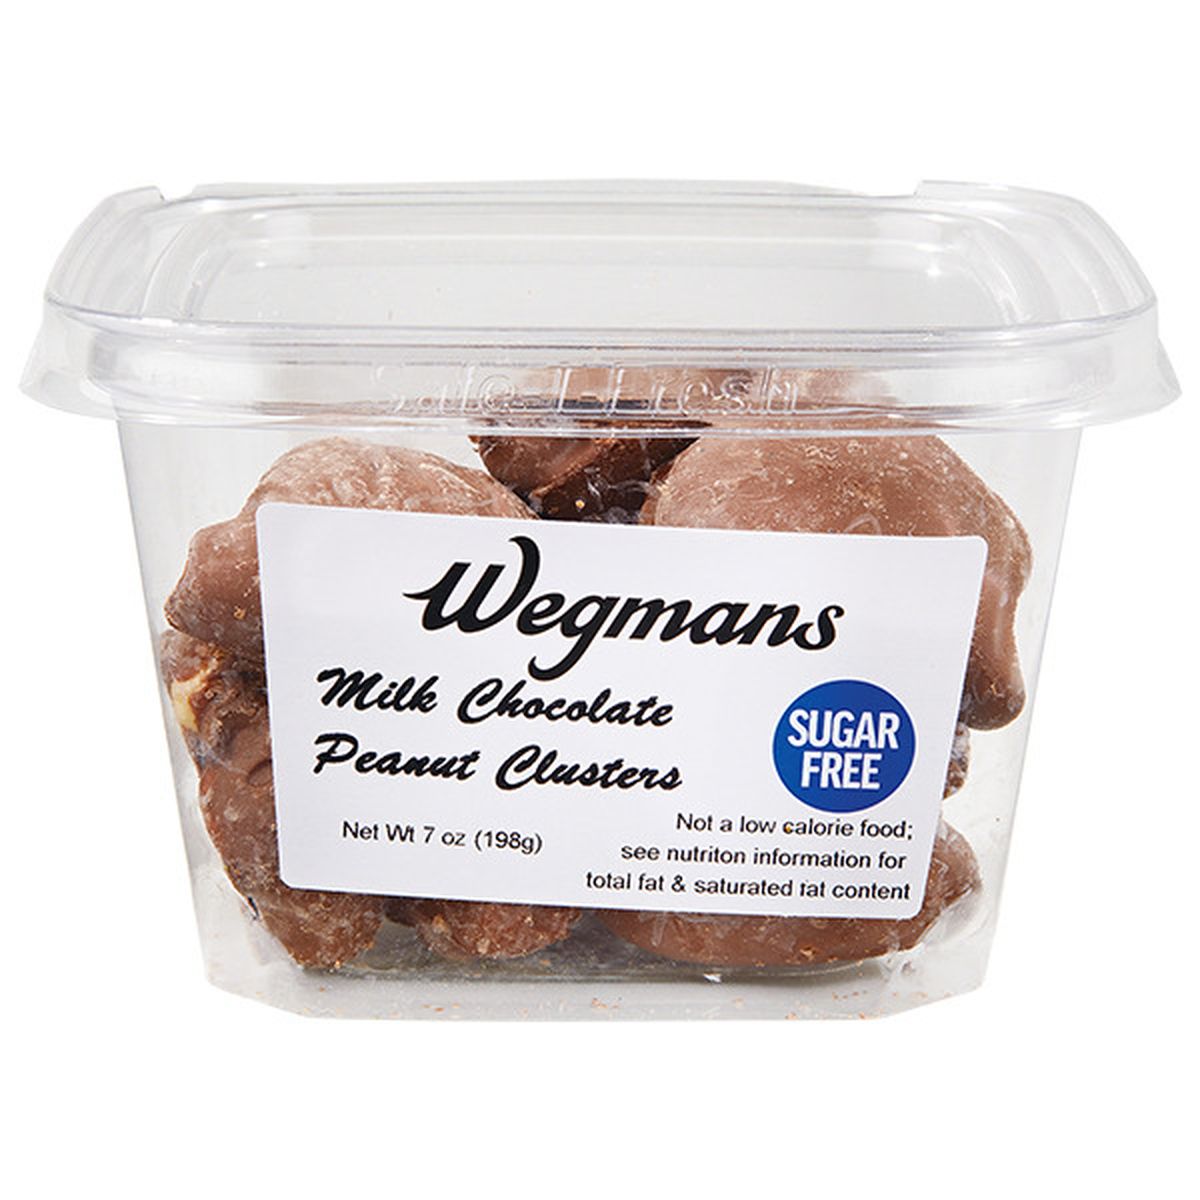 Calories in Wegmans Sugar Free Milk Chocolate Peanut Clusters